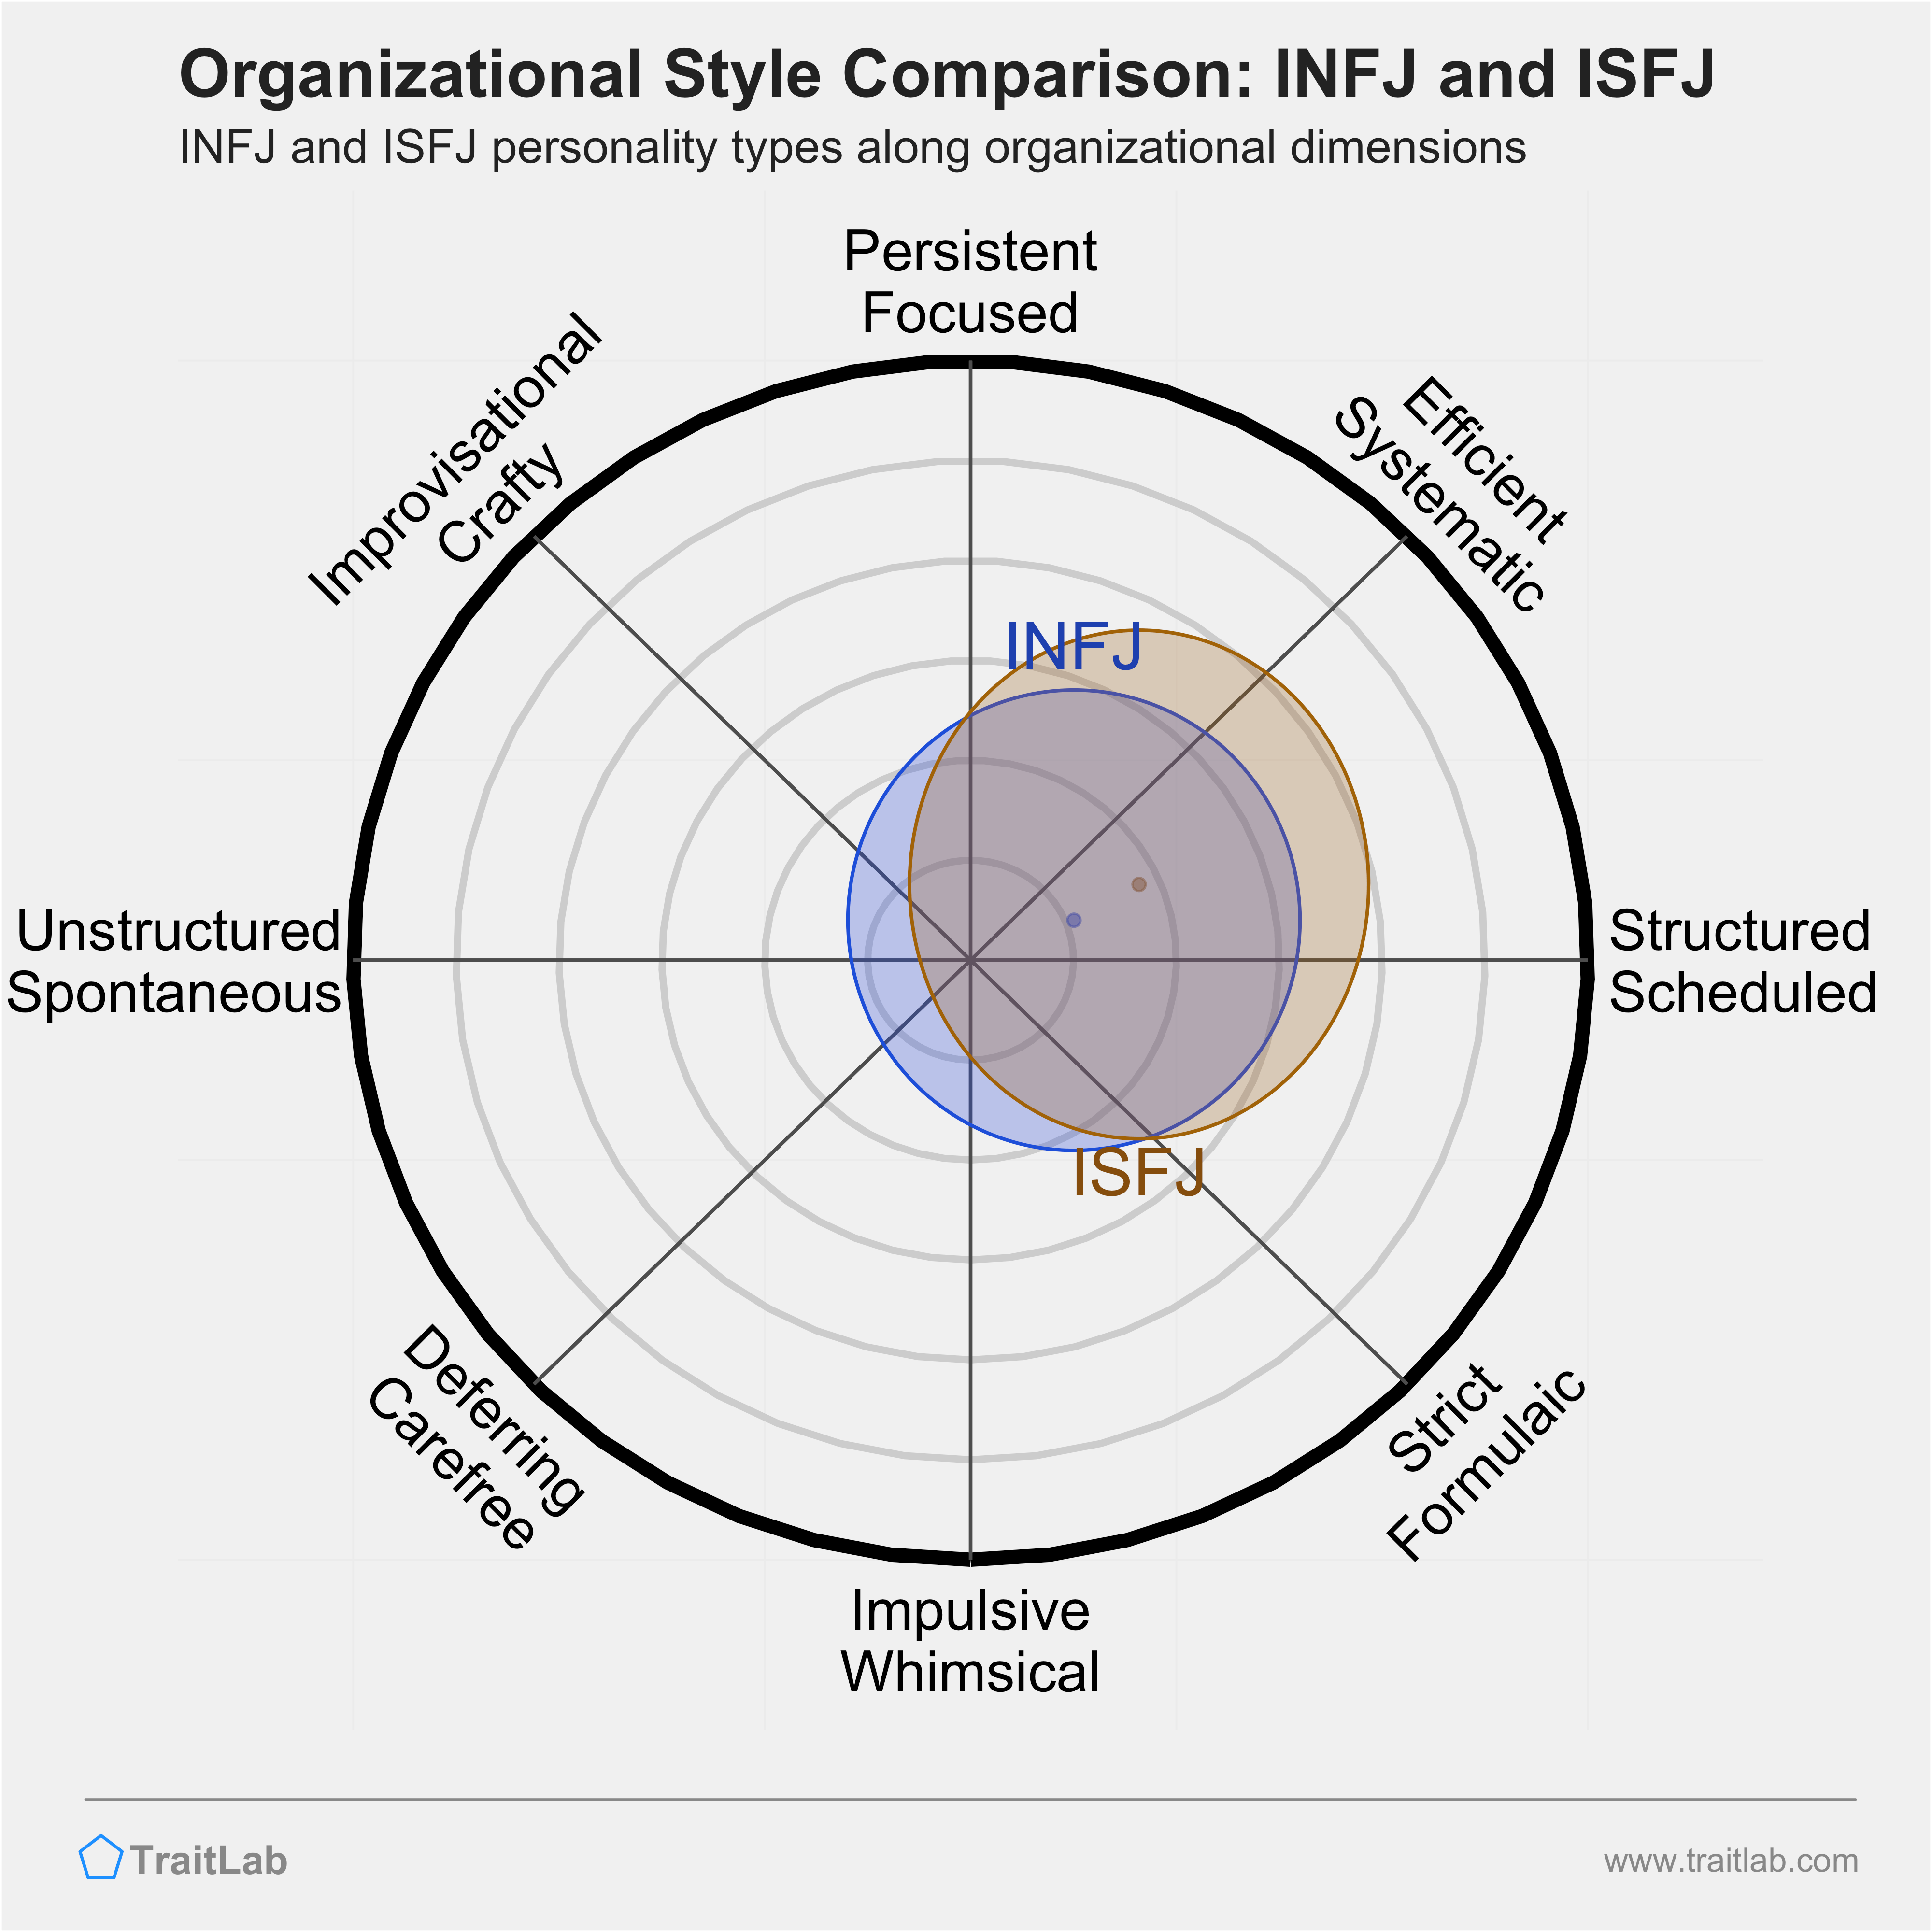 INFJ and ISFJ comparison across organizational dimensions